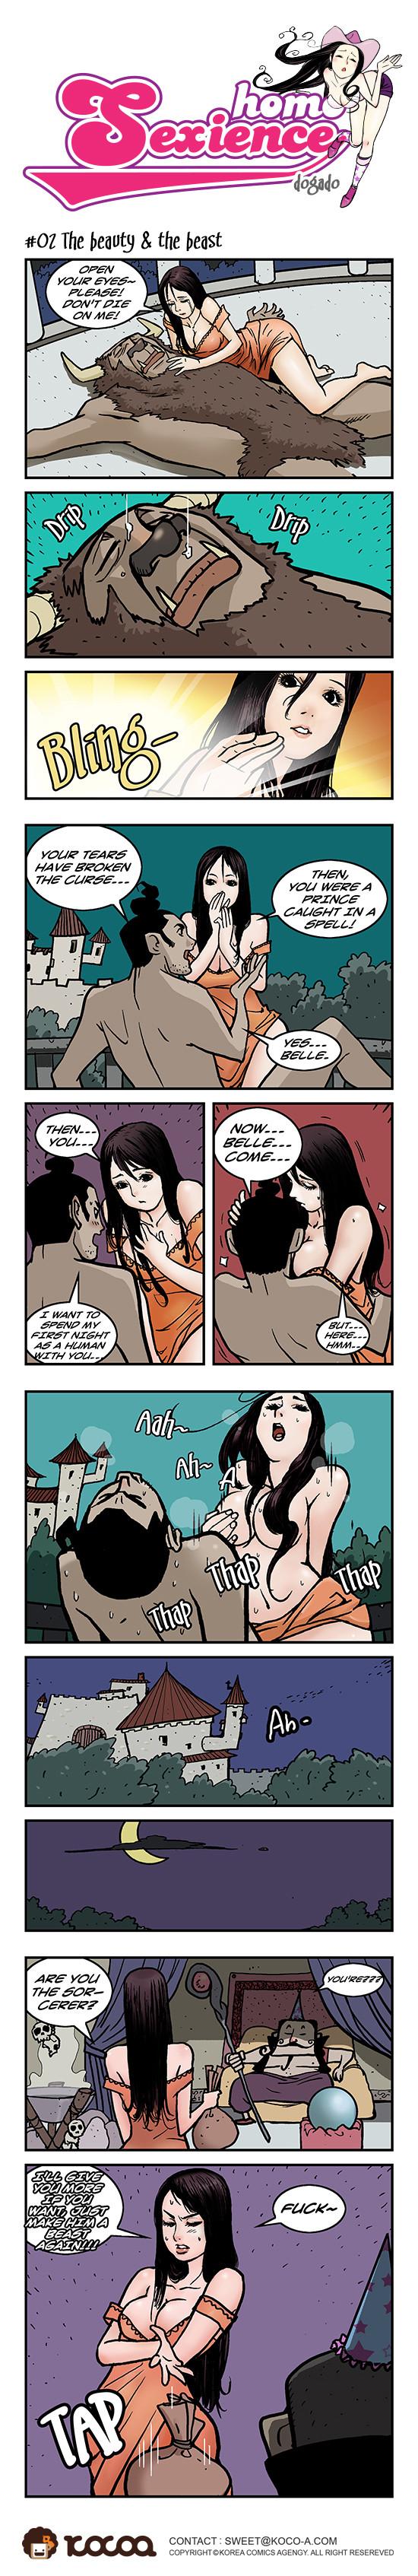 Public Nudity Homo Sexience Negao - Page 2